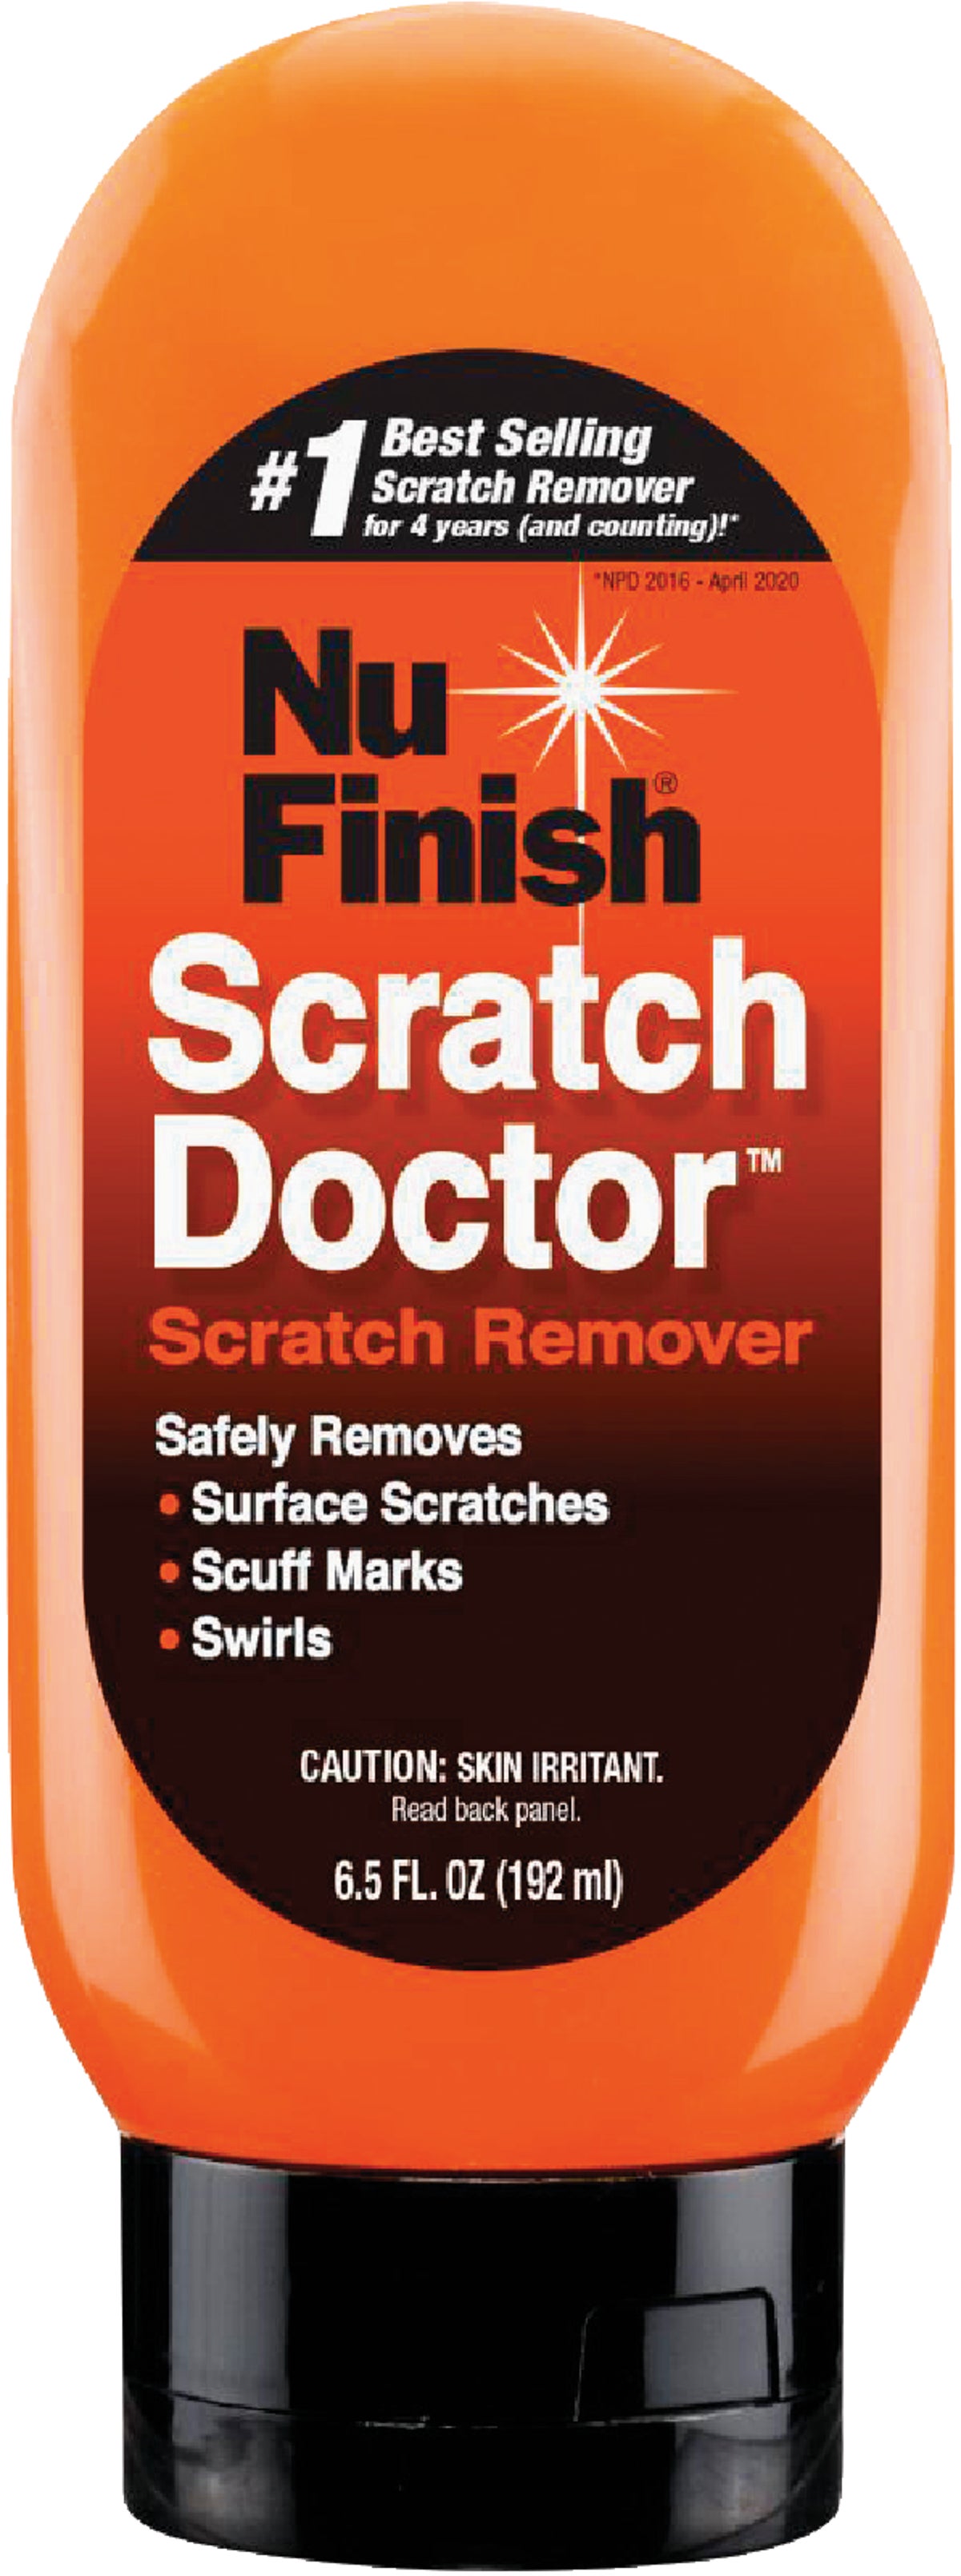 Nu Finish on Instagram: Scratch Doctor sets the bar for scratch